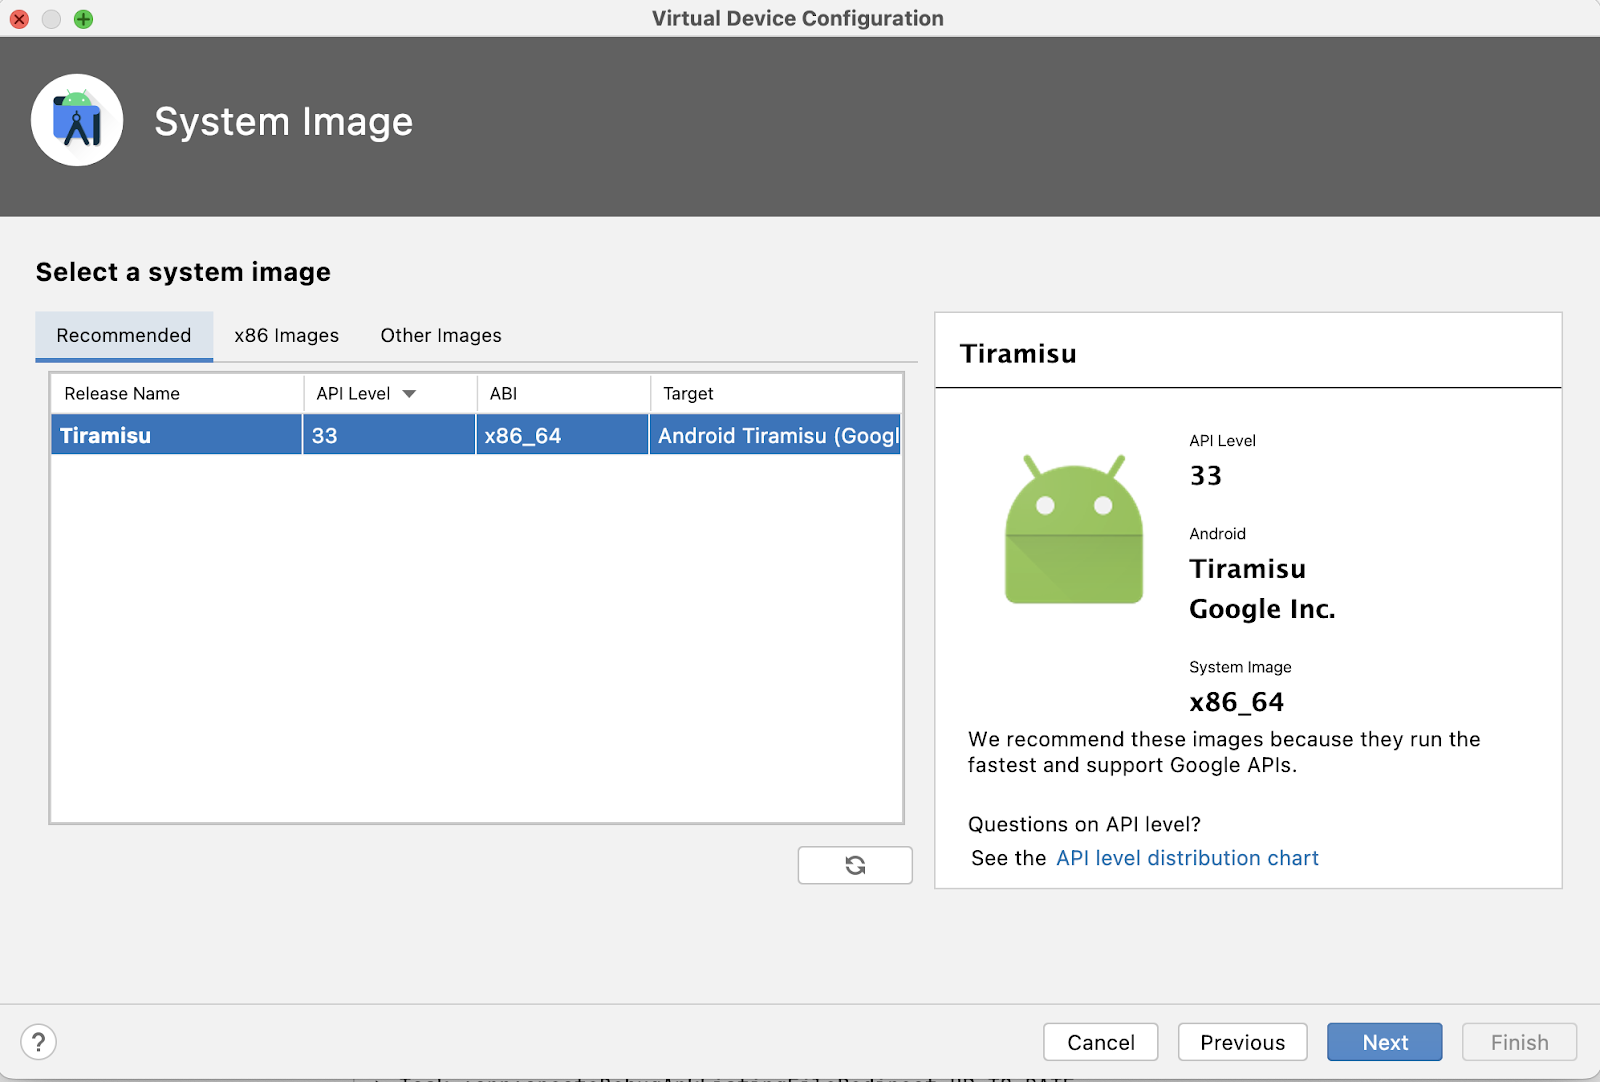 La ventana Virtual Device Configuration muestra un mensaje para seleccionar una imagen del sistema. Se selecciona la API de Tiramisu.